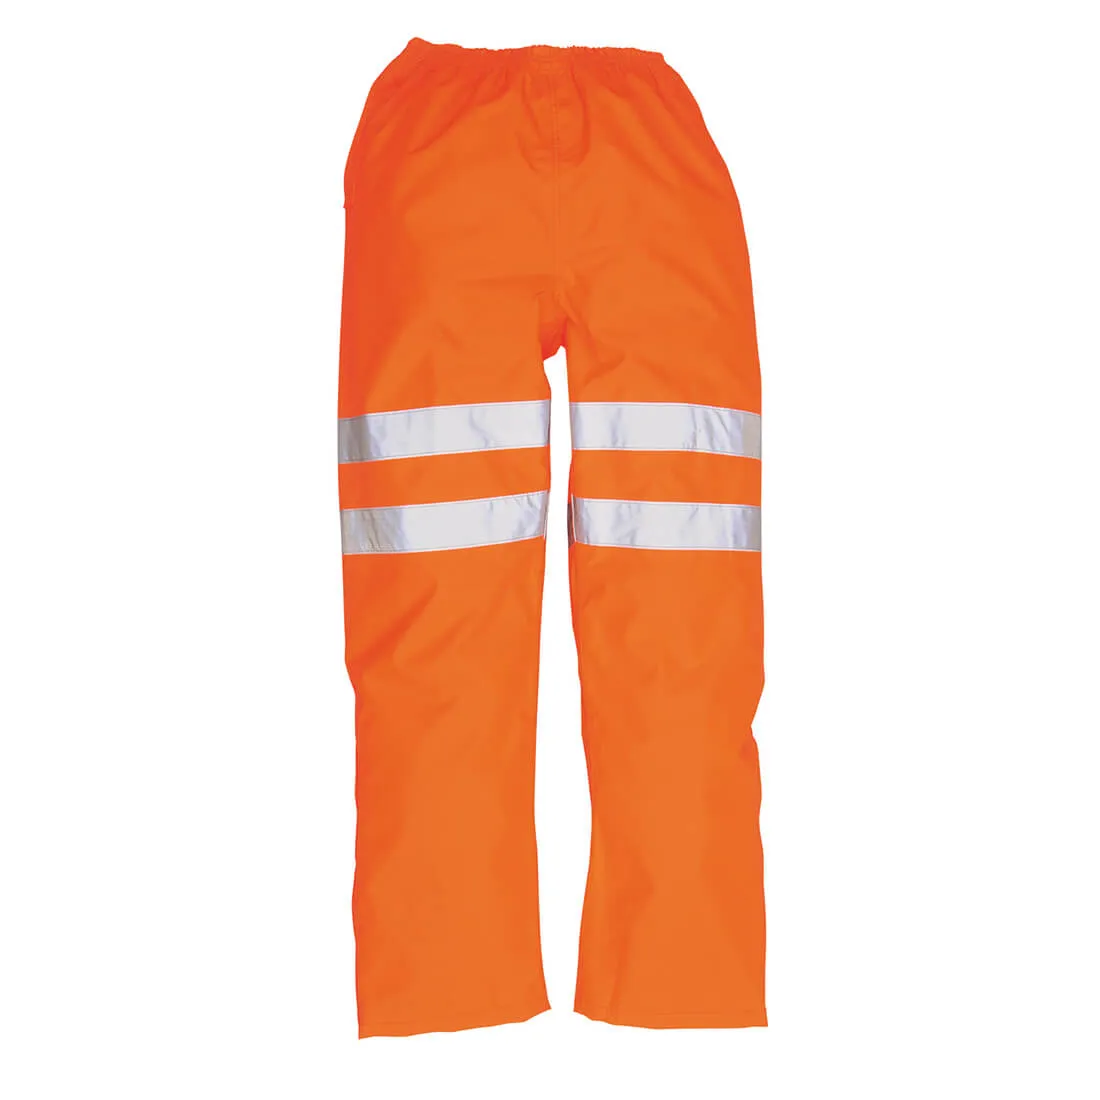 Oxford Weave 300D Class 2 GO/RT Hi Vis Traffic Trousers - Orange, XL